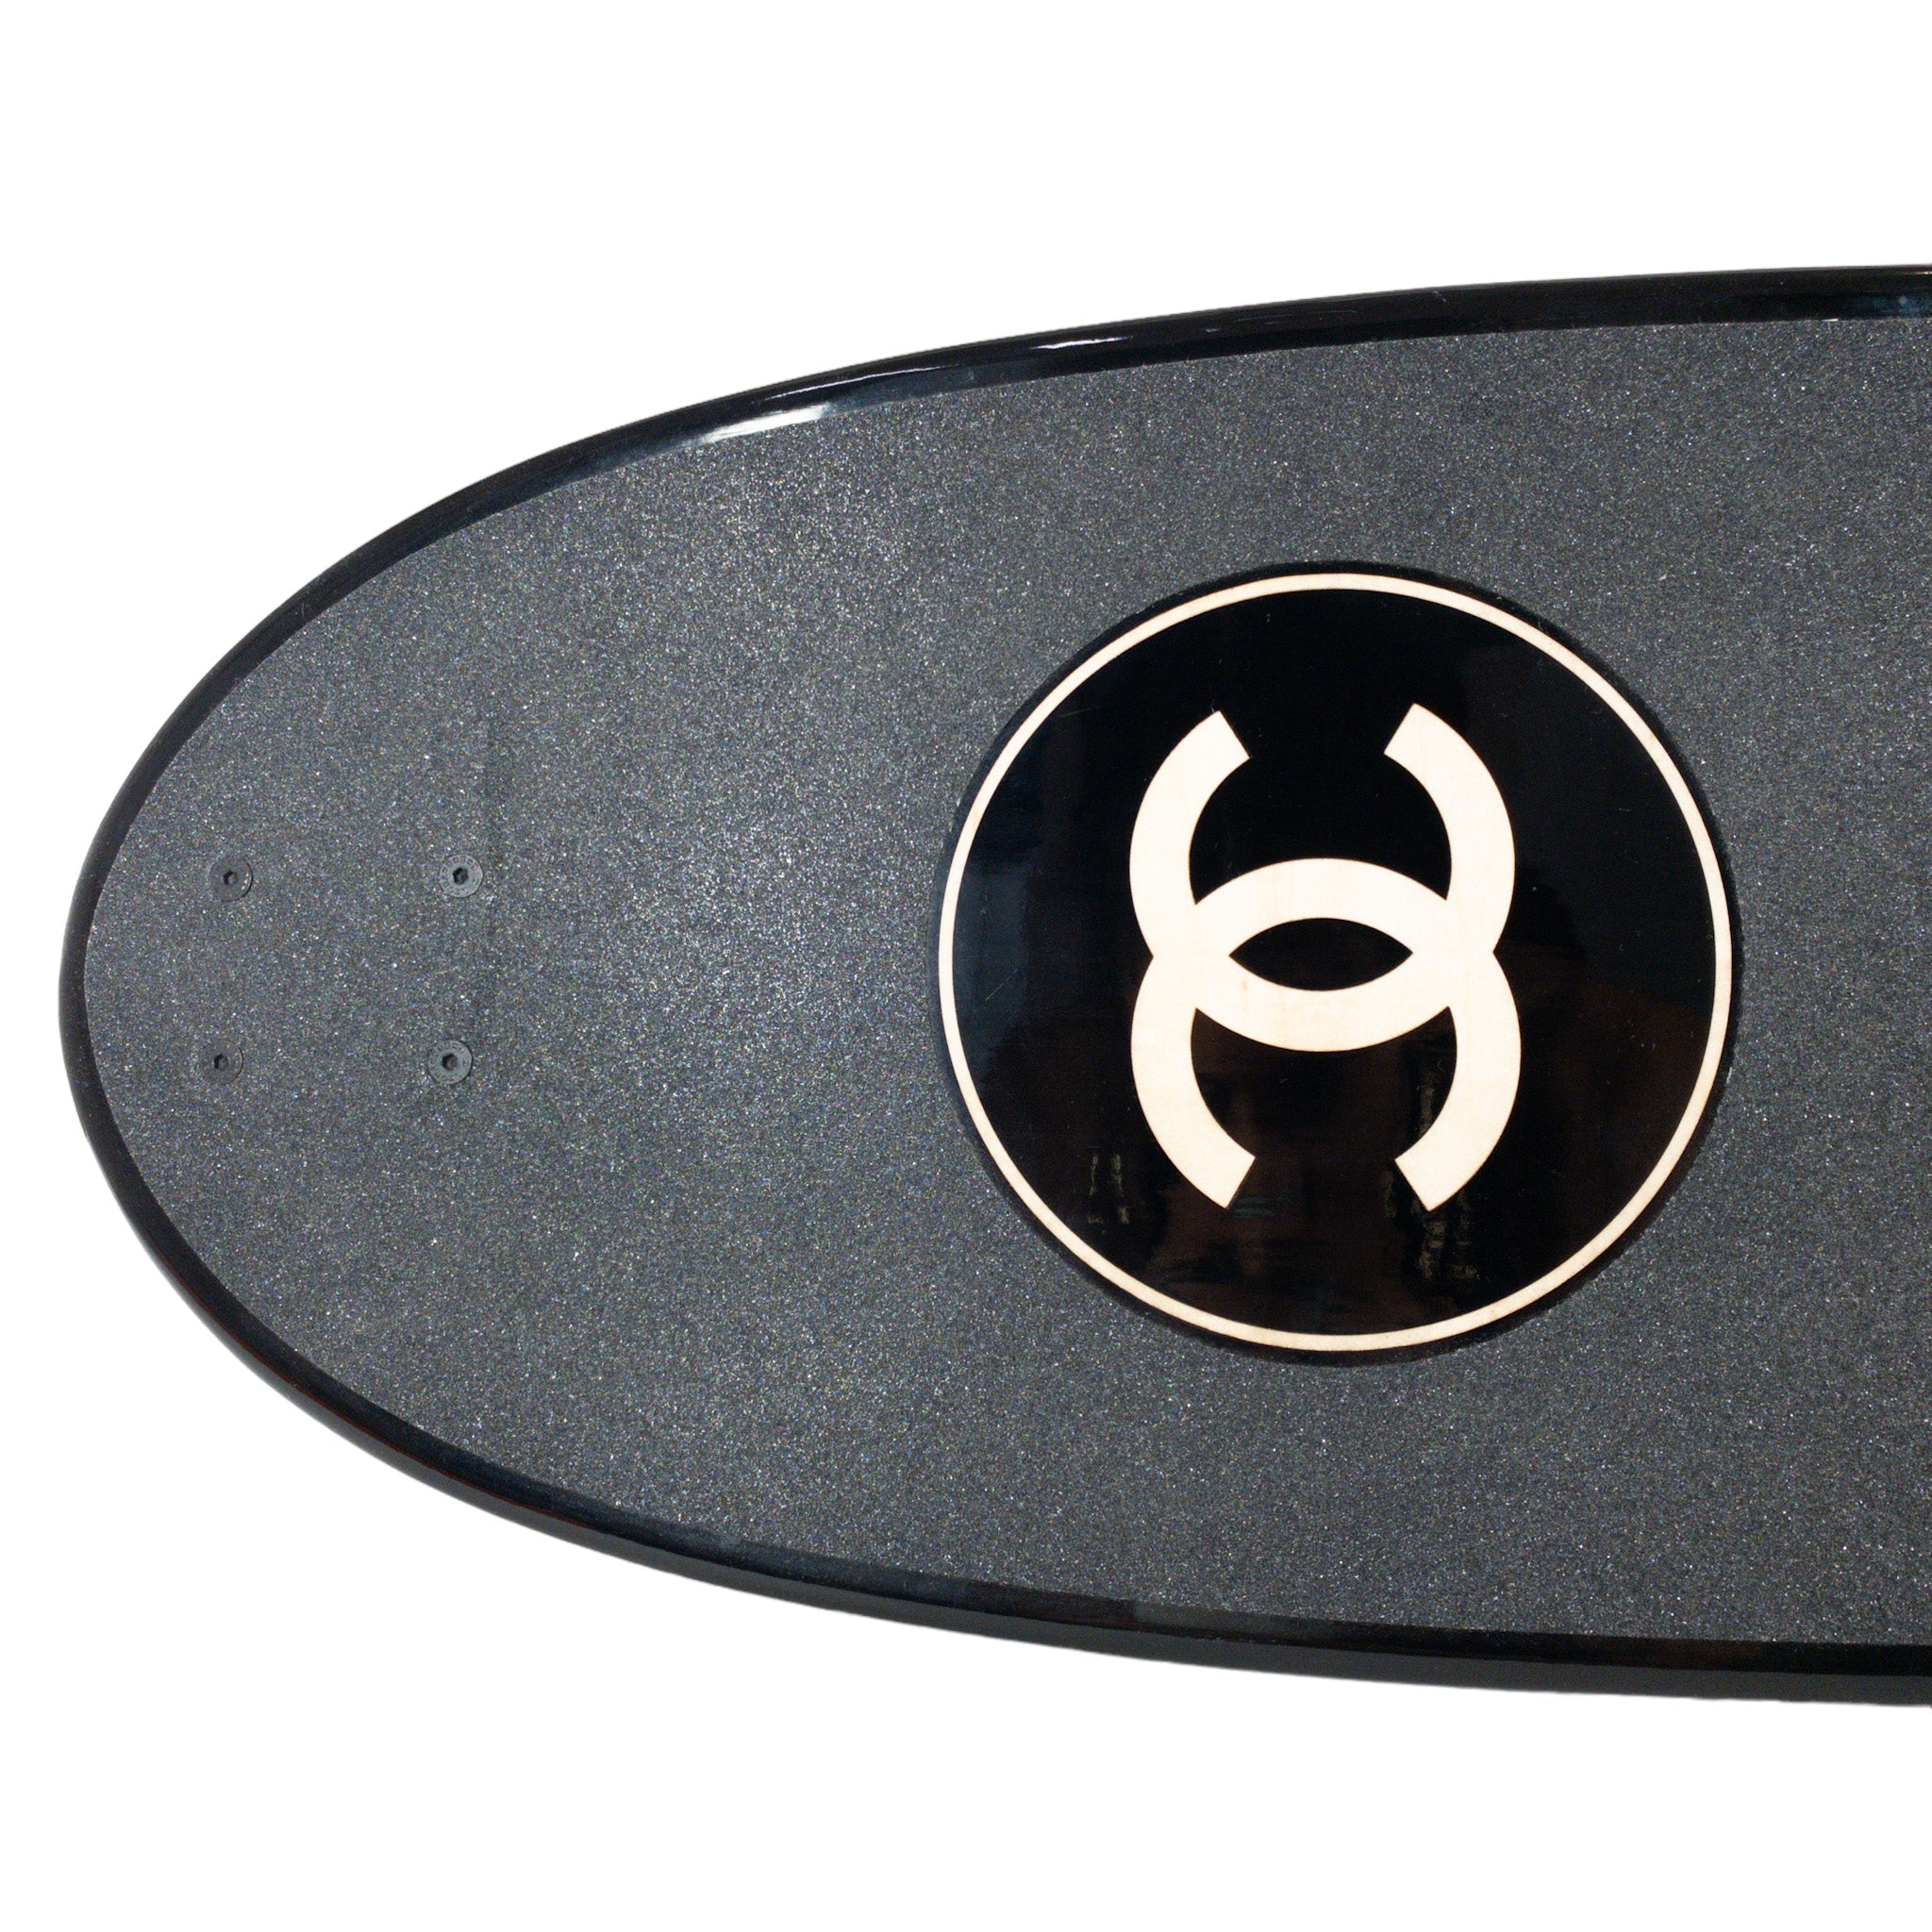 Chanel Limited Edition 2019 Skateboard